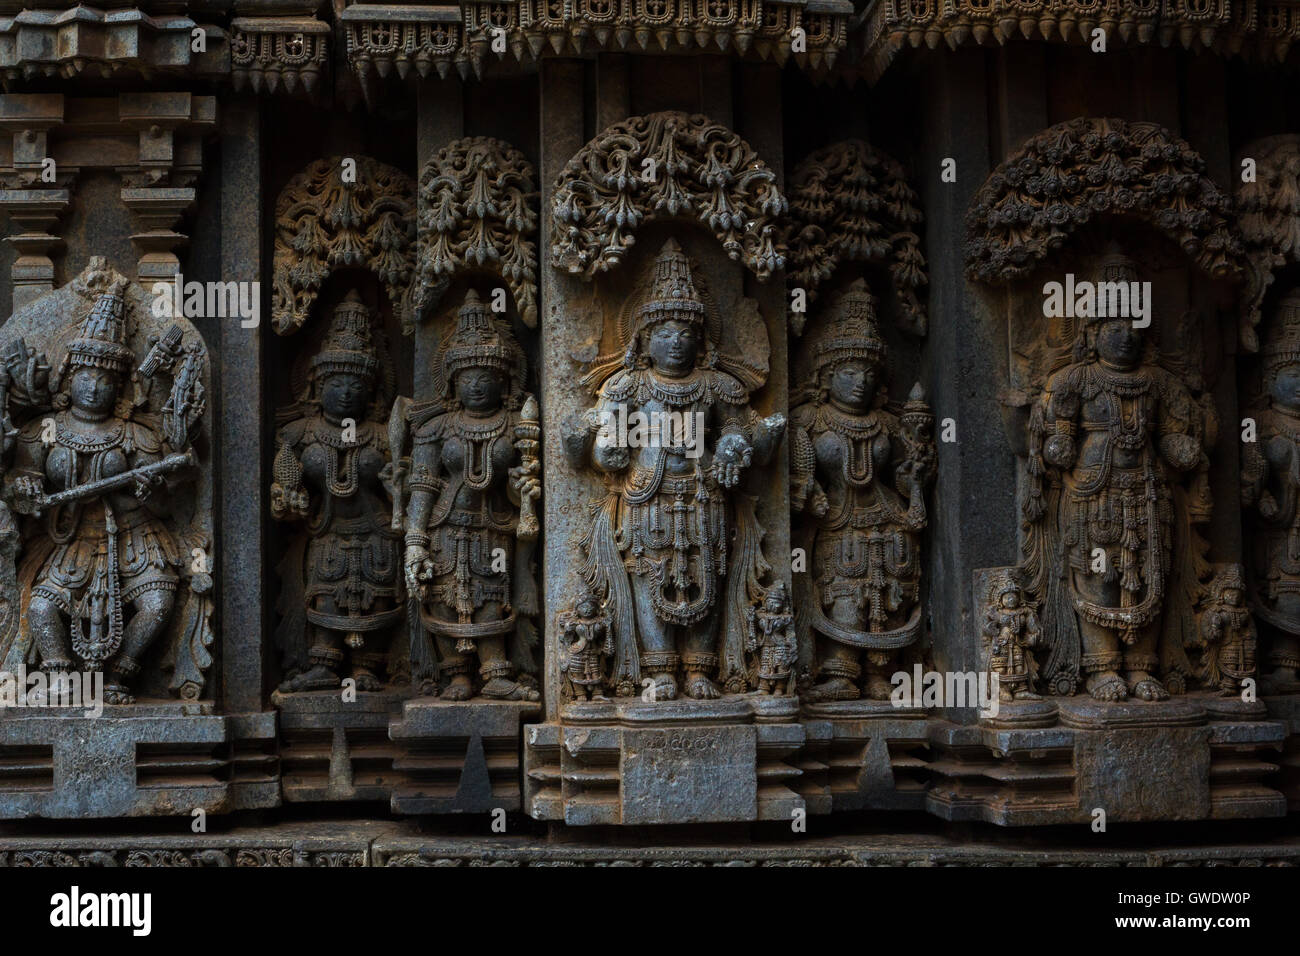 Deity sculpture under eves on shrine outer wall in the Chennakesava temple at Somanathapura, Karnataka,India, Asia Stock Photo